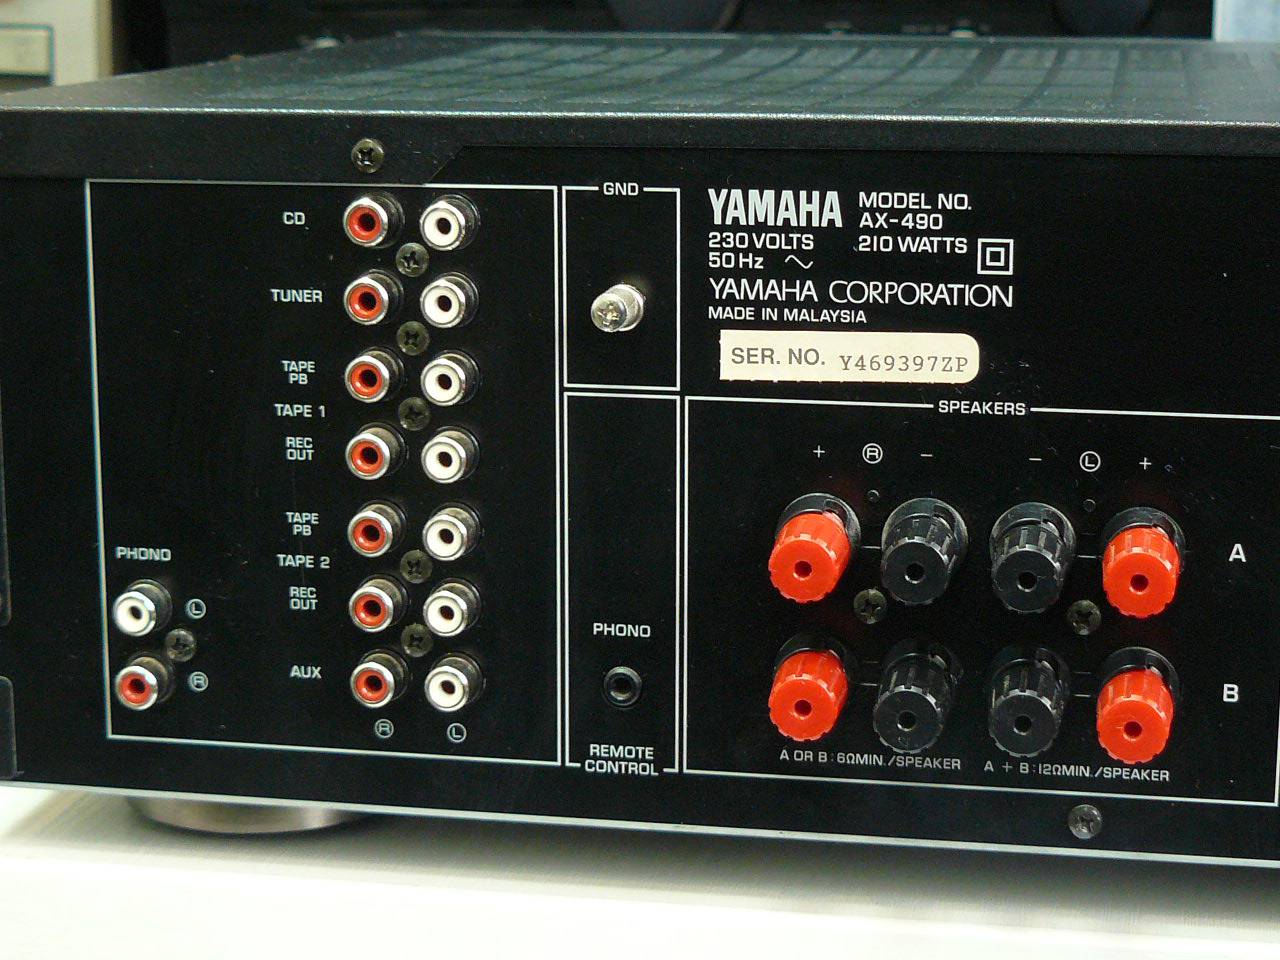 Yamaha AX-490